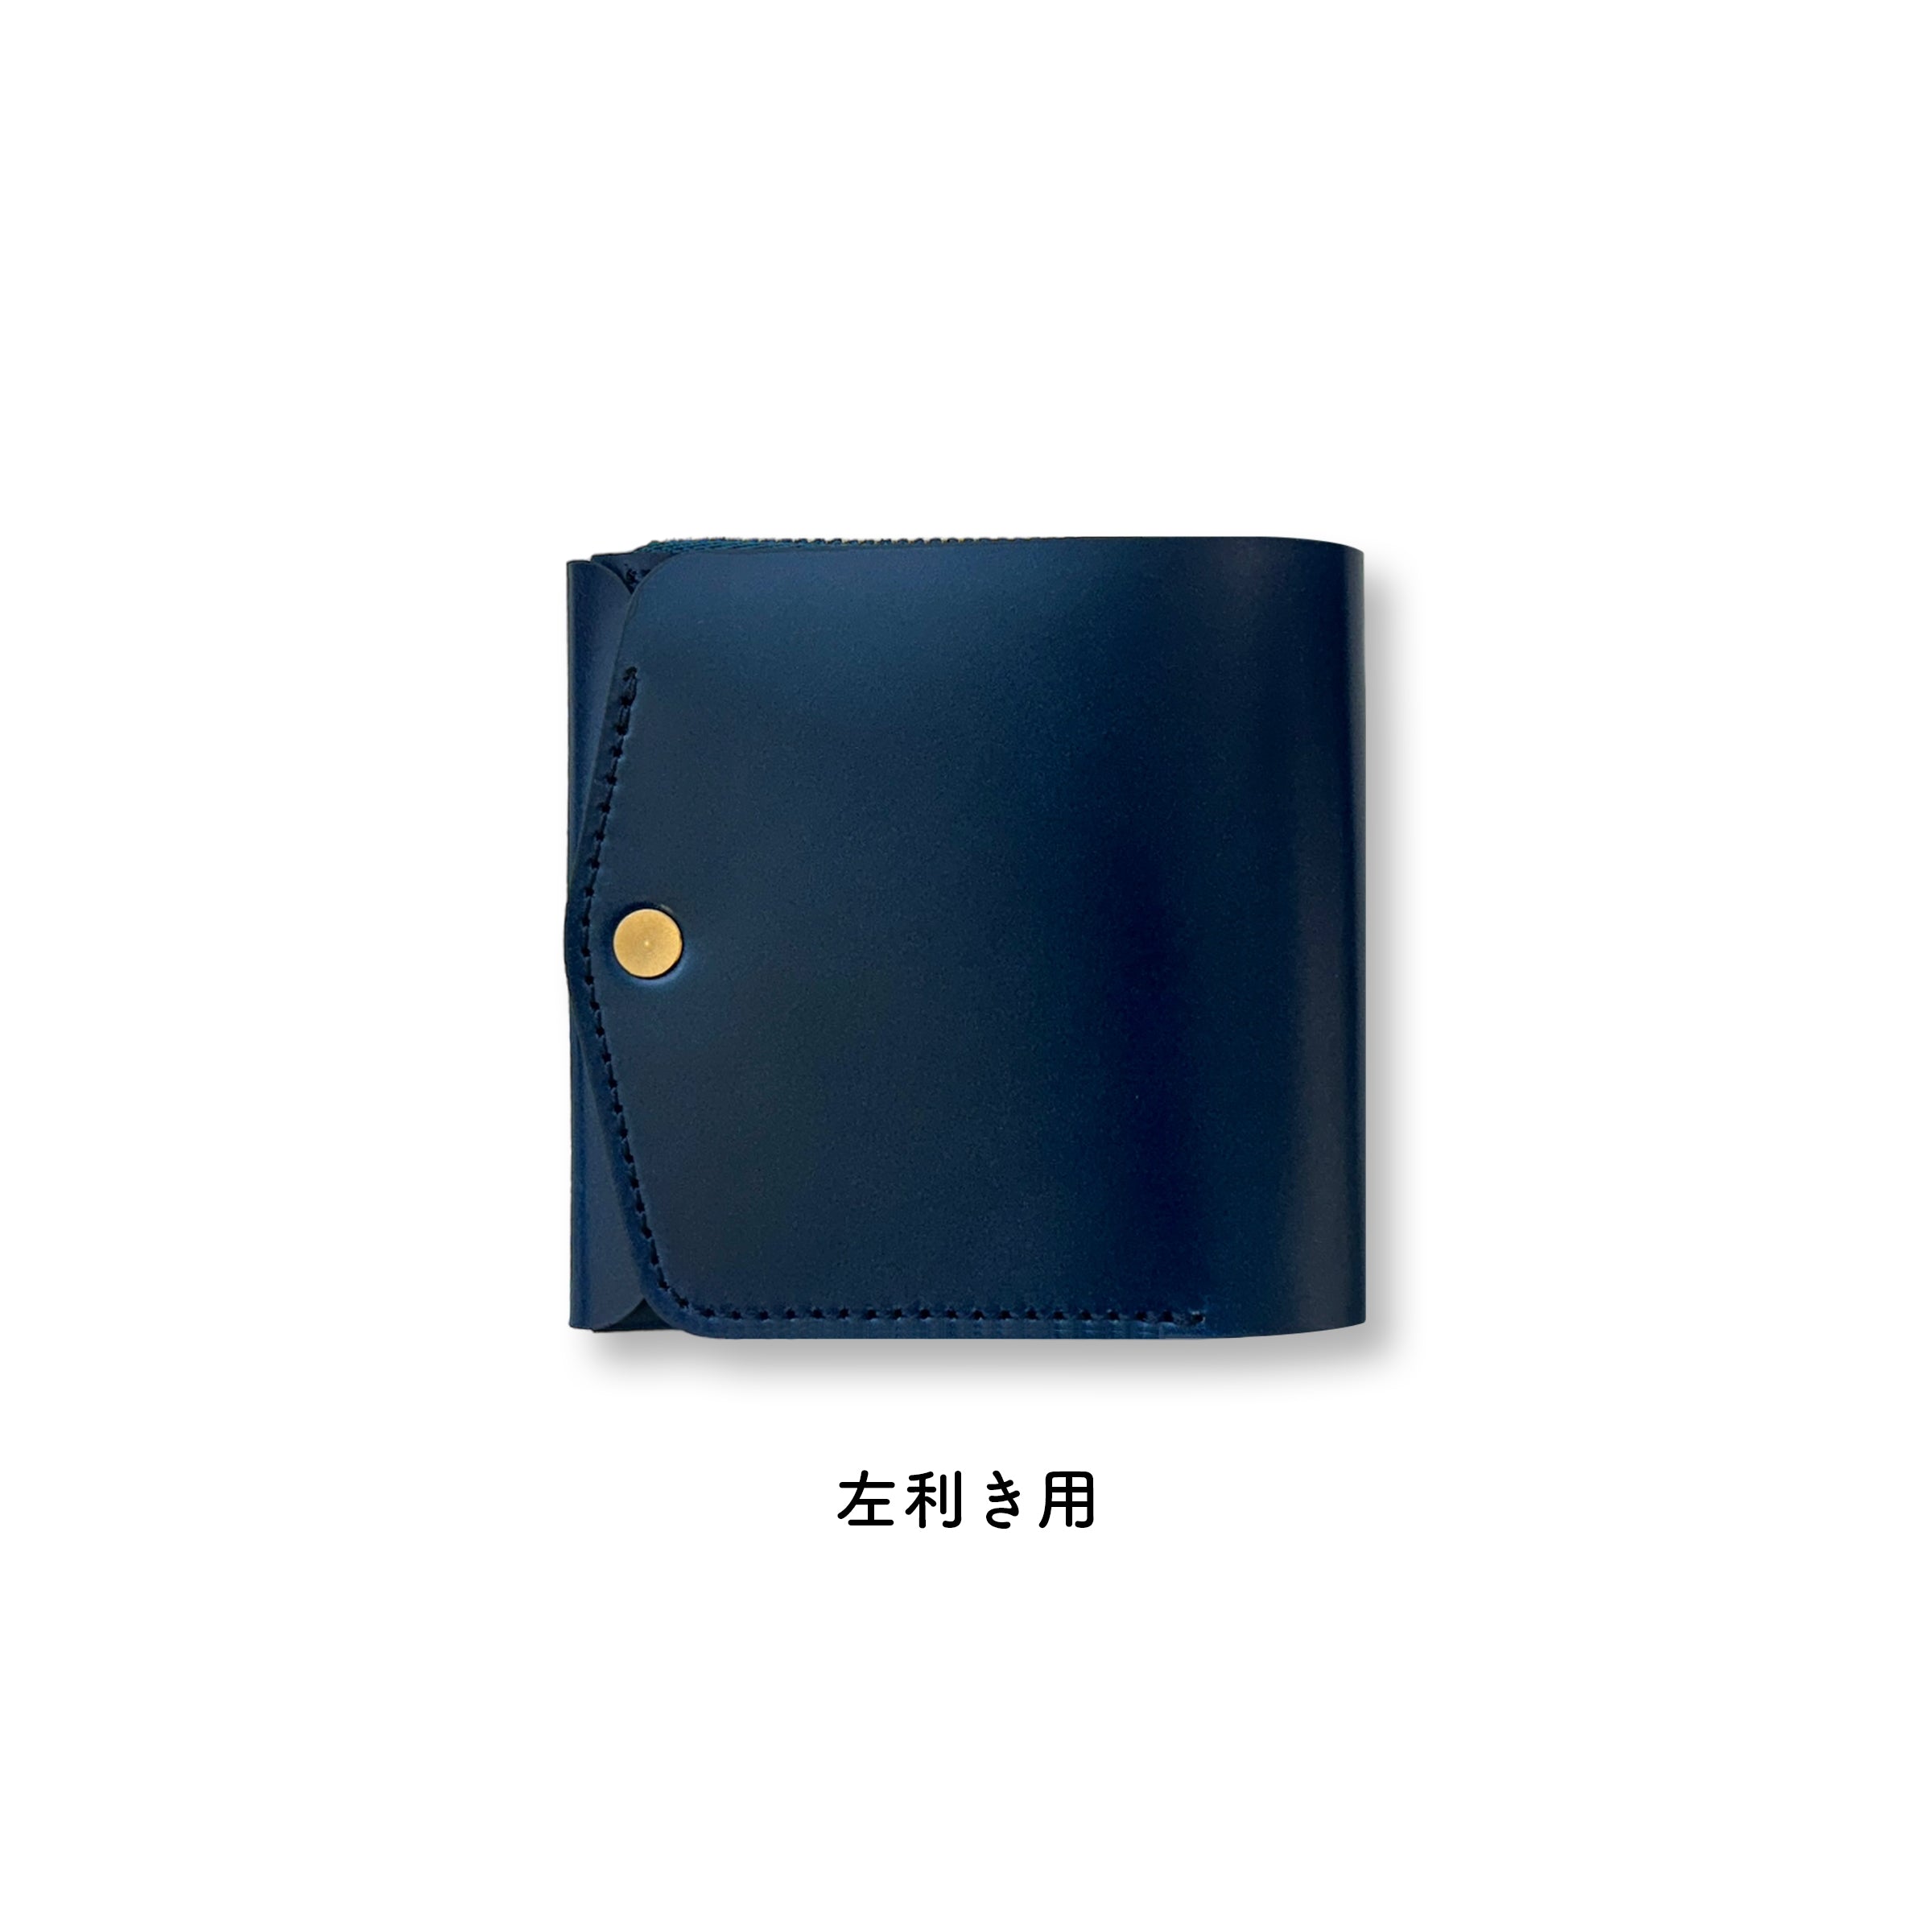 moku 小さく薄い財布 Saku ver.3 コードバン ブルー内装ブッテーロ